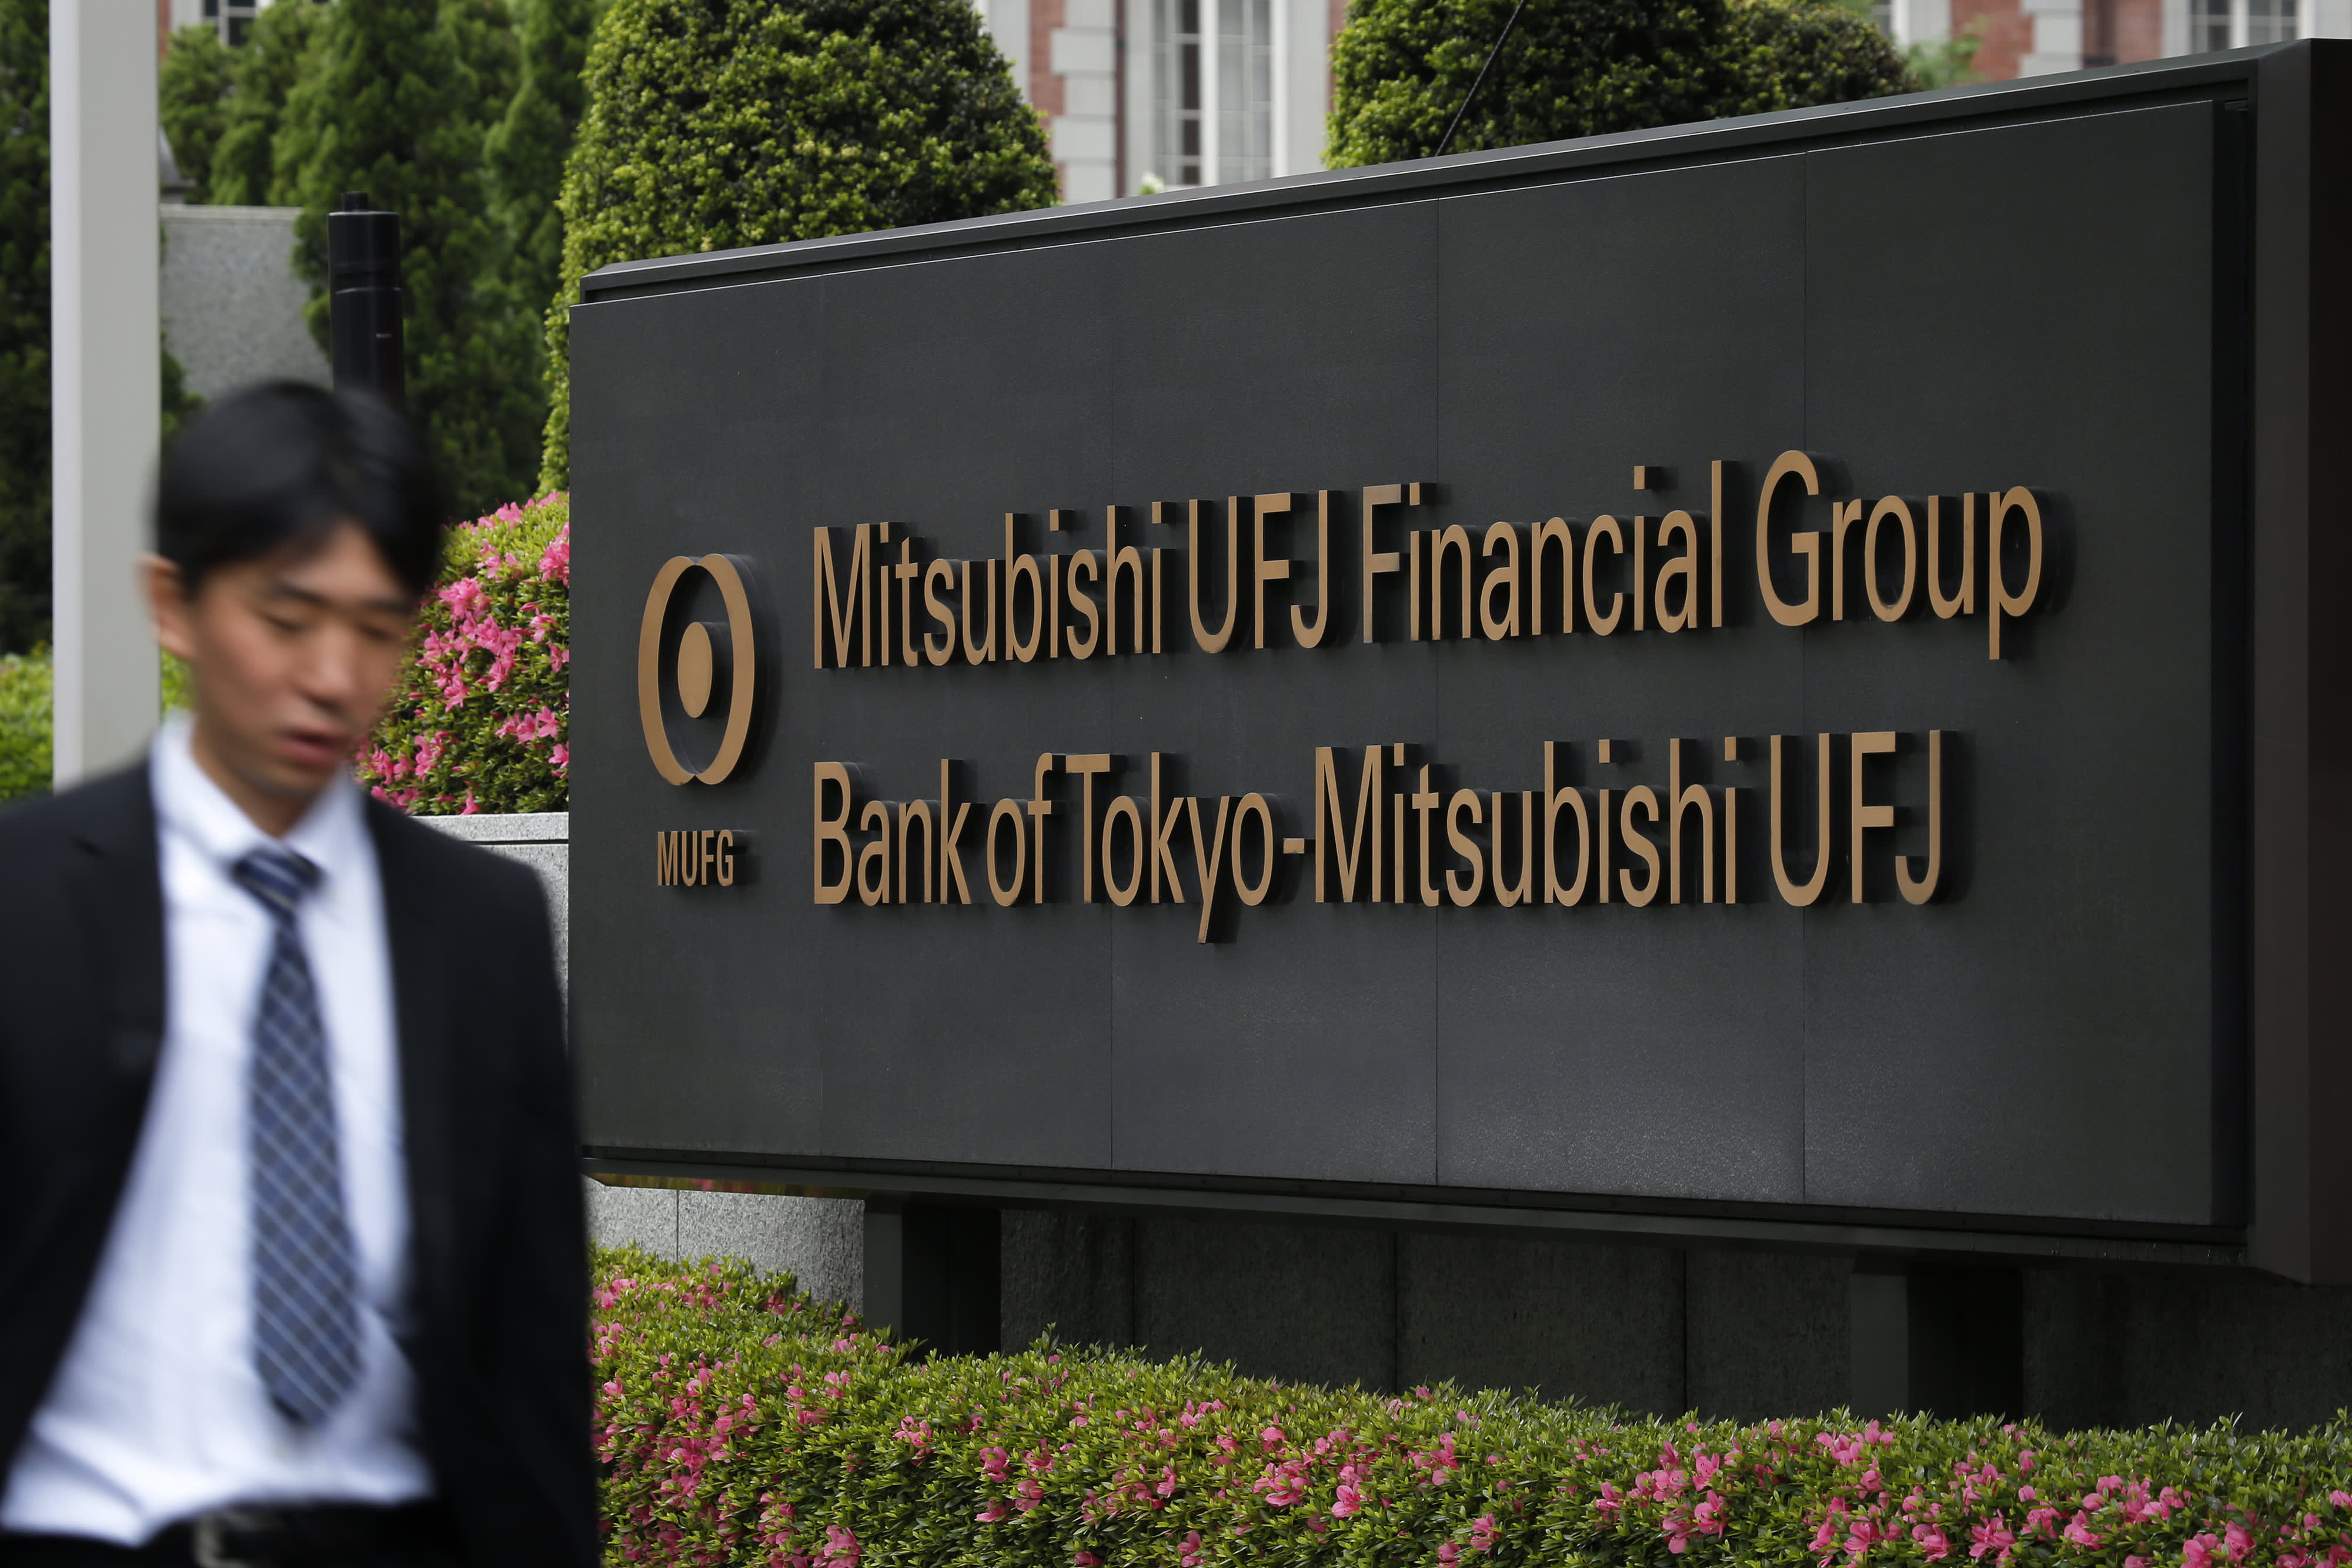 Bank of Tokyo-Mitsubishi UFJ ATM Corner / Foreign Currency Exchange